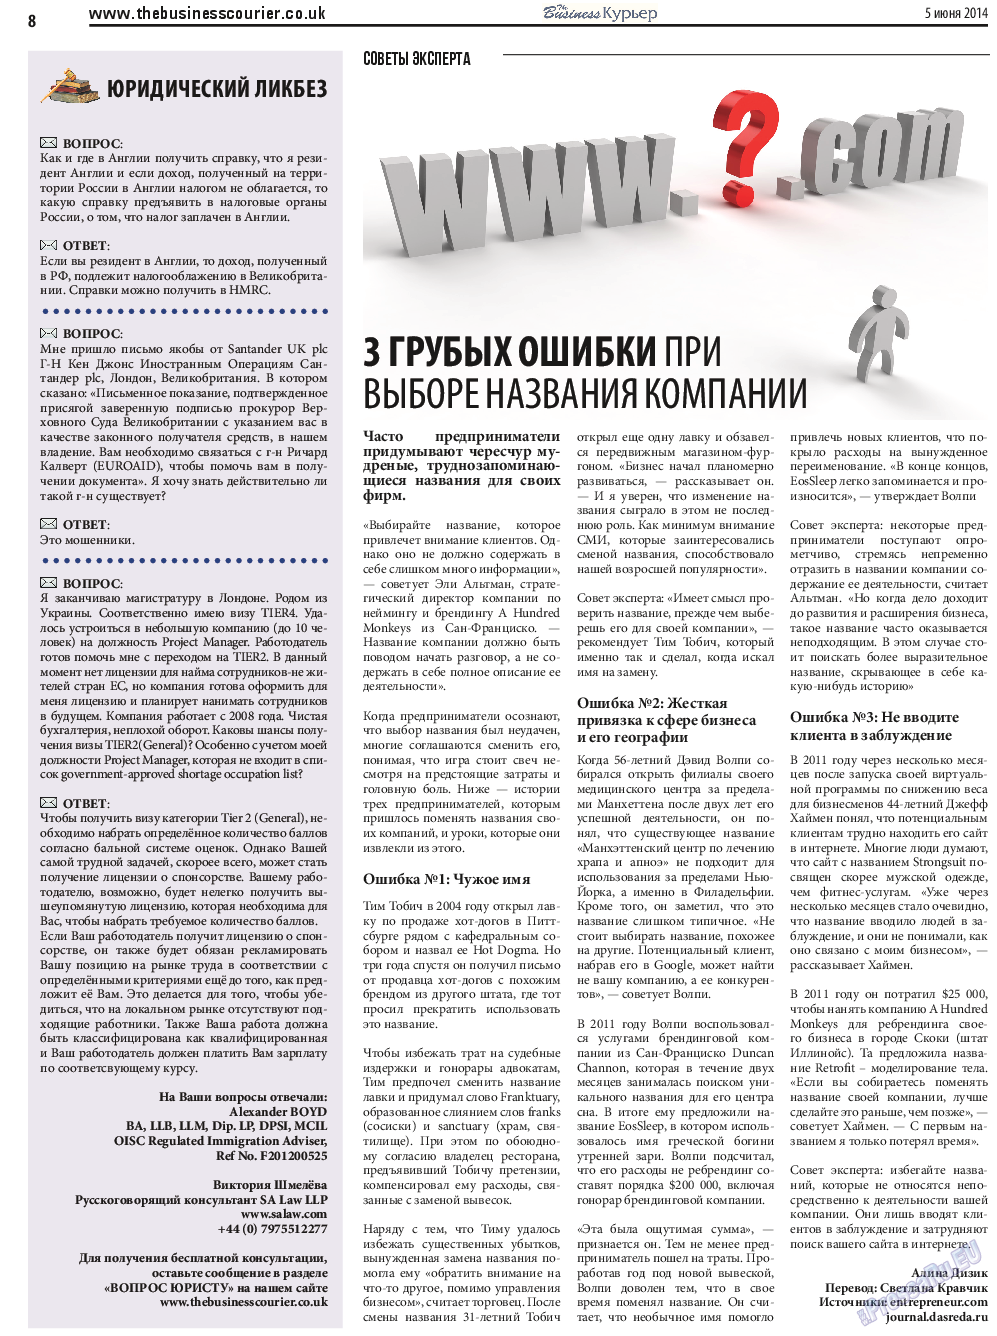 The Business Курьер, газета. 2014 №24 стр.8